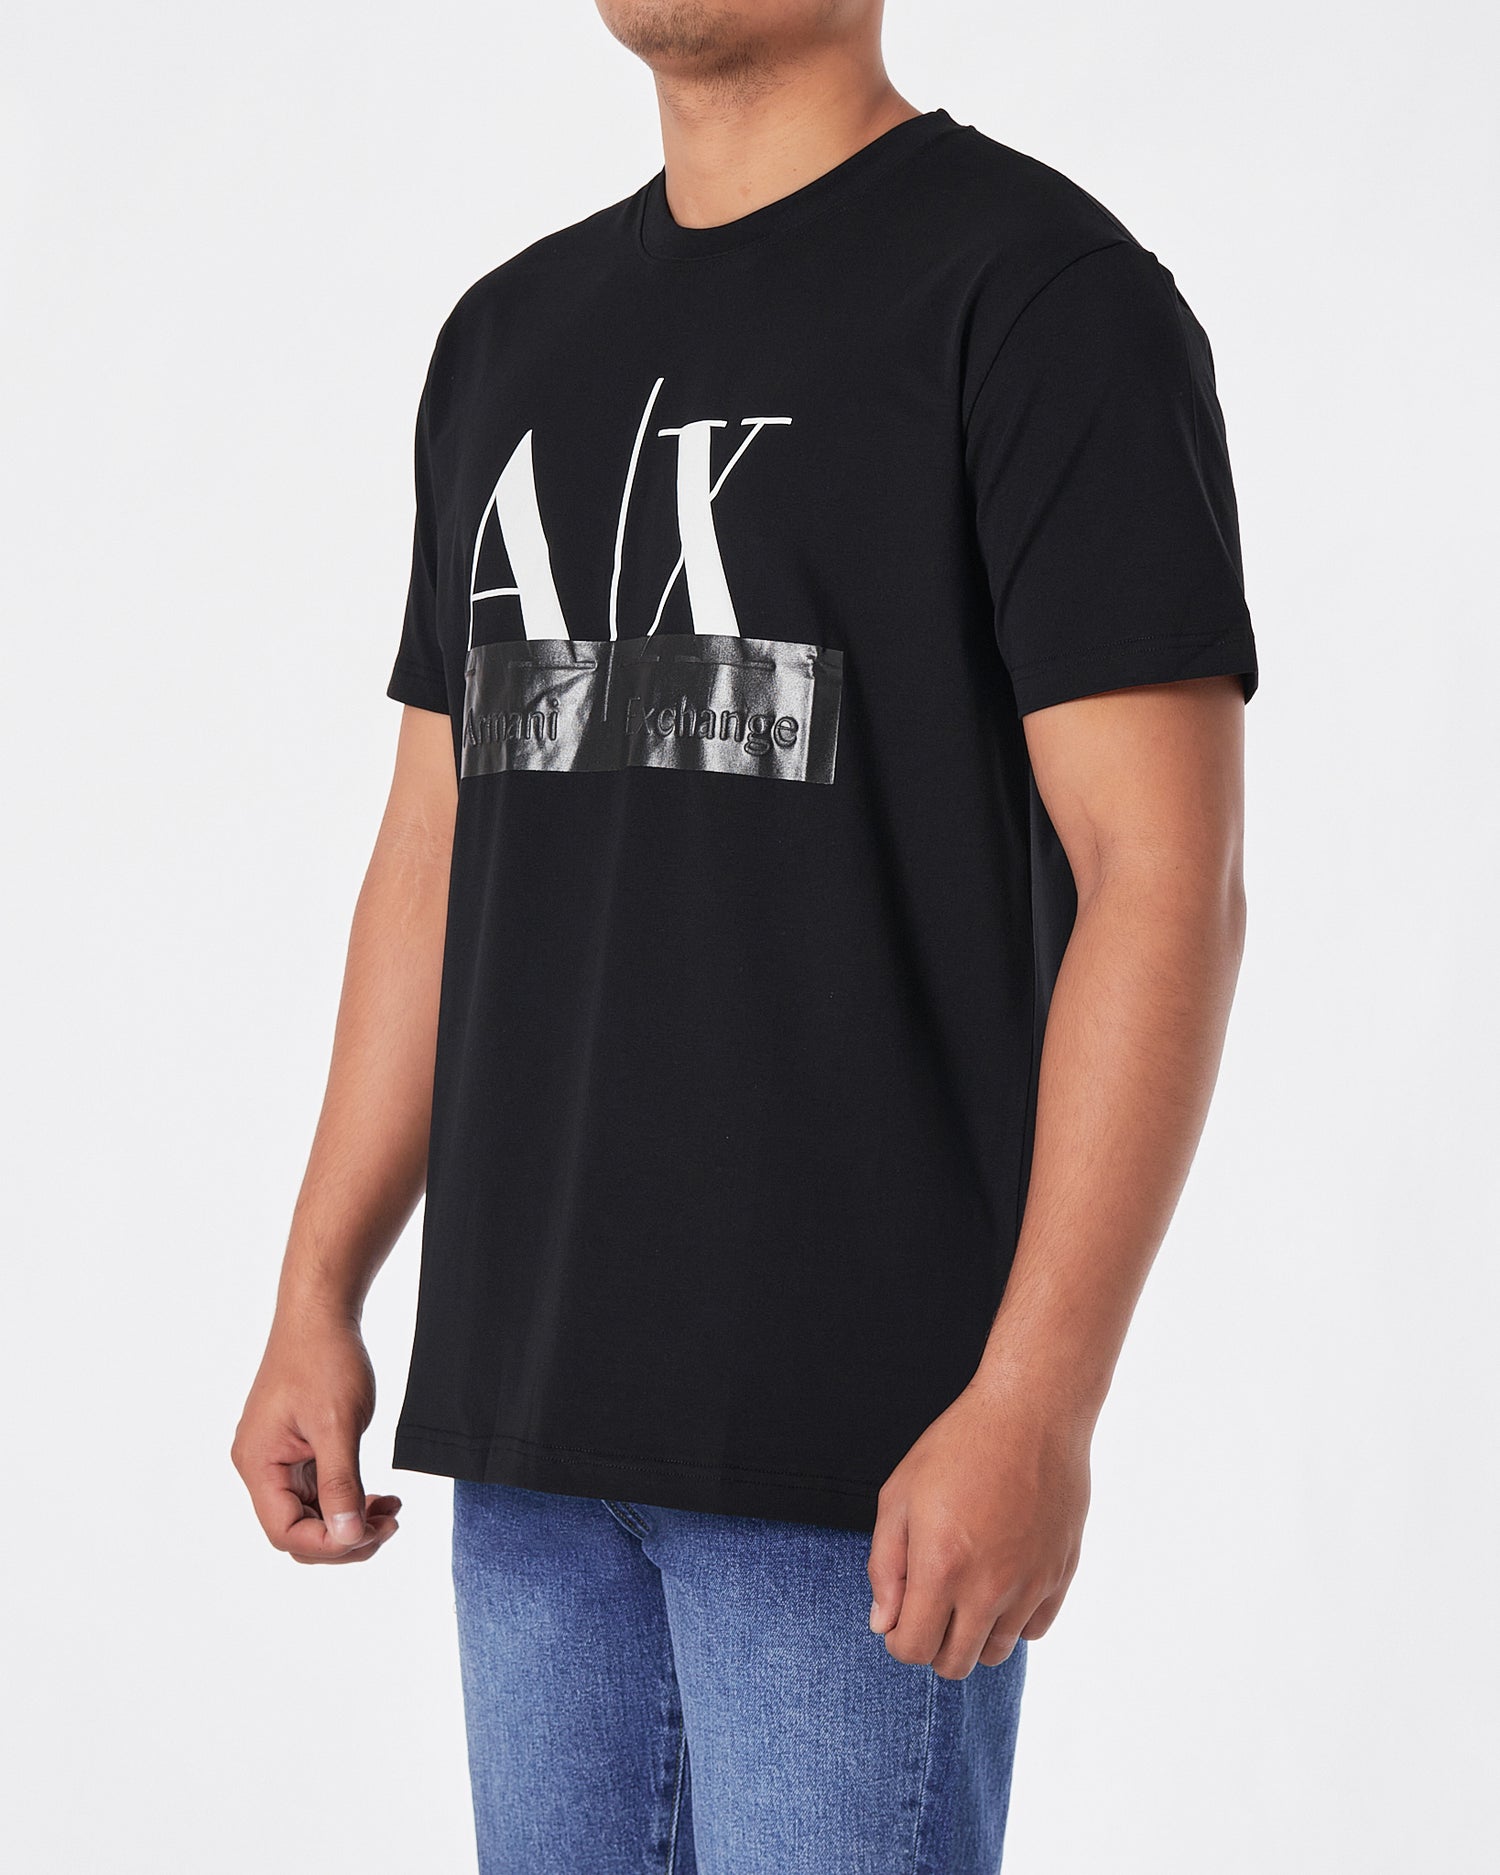 ARM AX Logo Printed Men Black T-Shirt 16.90